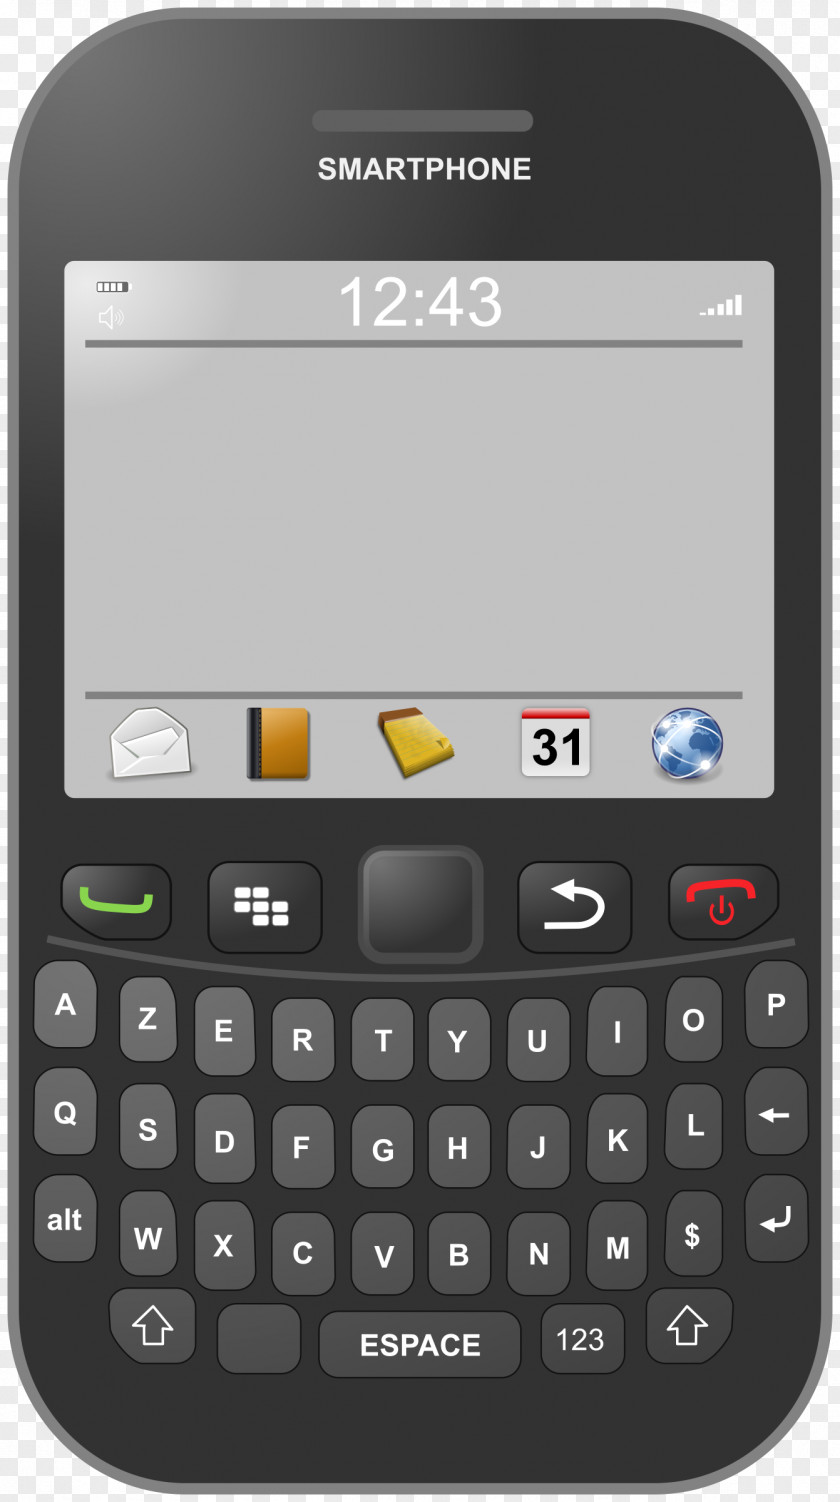 Smartphone BlackBerry Q10 Vector Graphics Image Clip Art Priv PNG